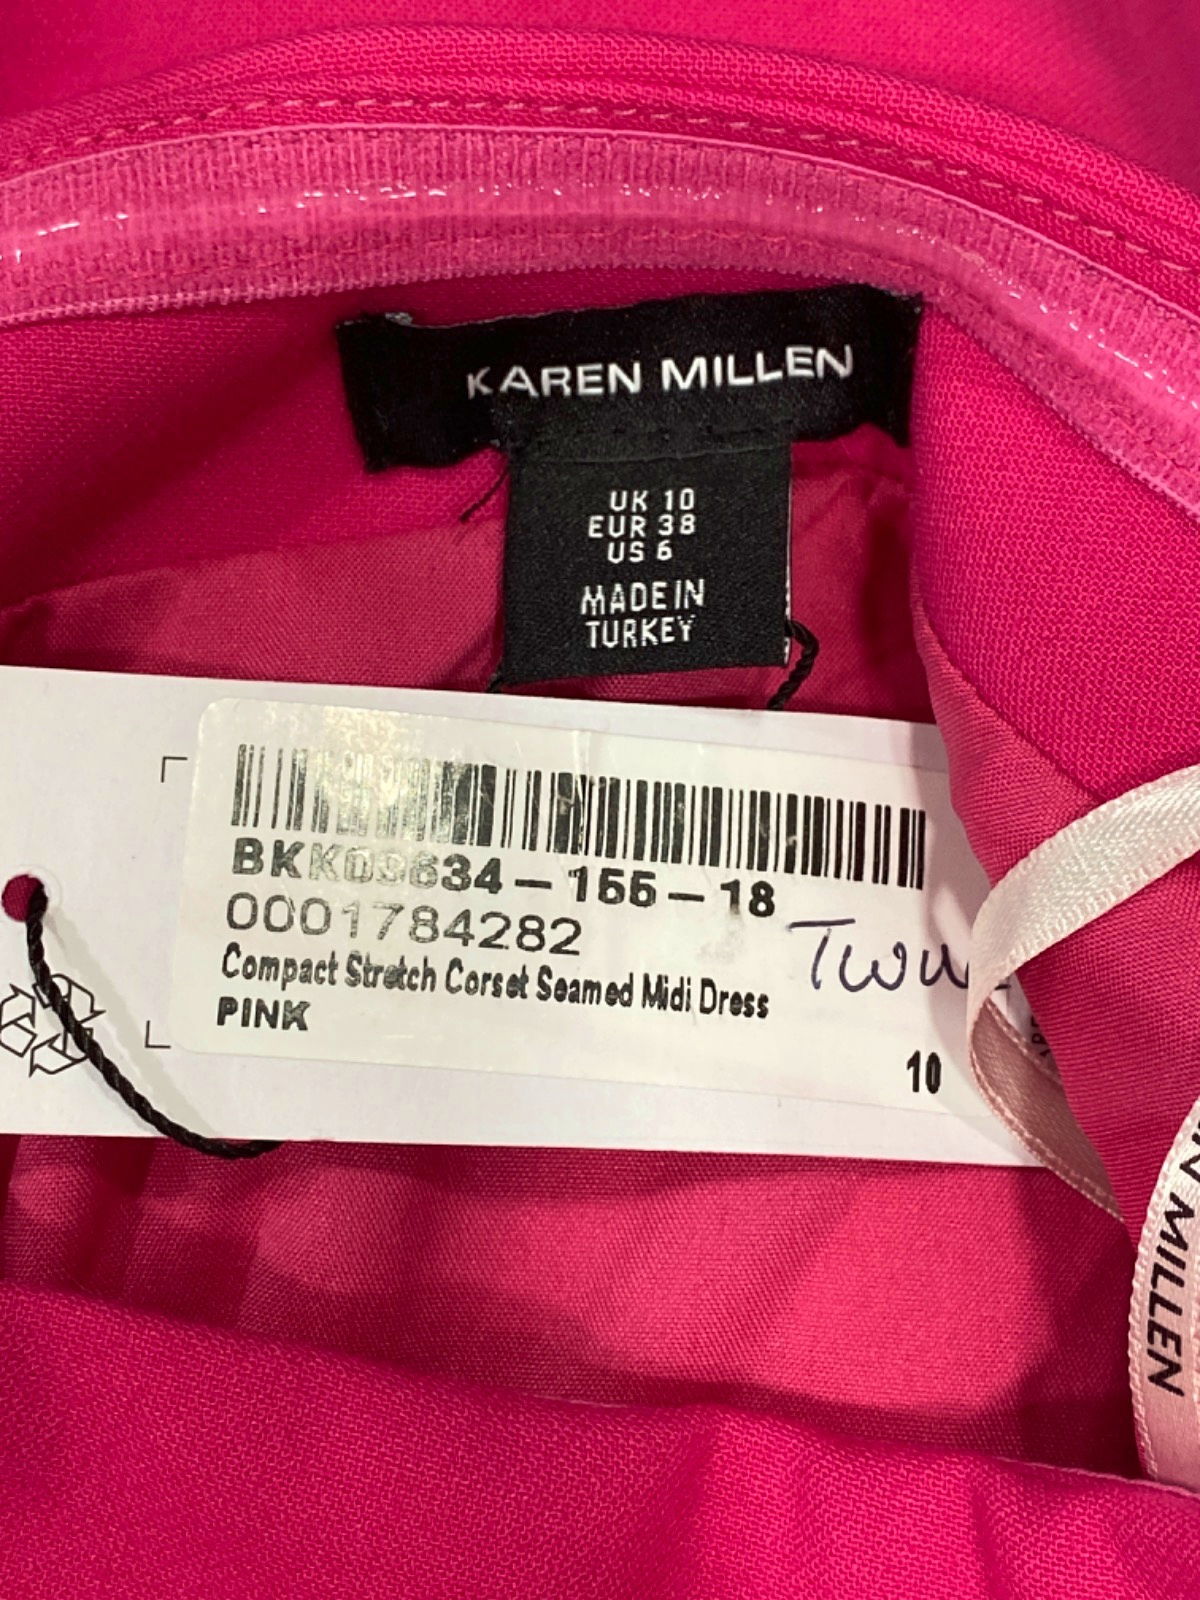 Karen Millen Pink Compact Stretch Corset Seamed Midi Dress UK 18